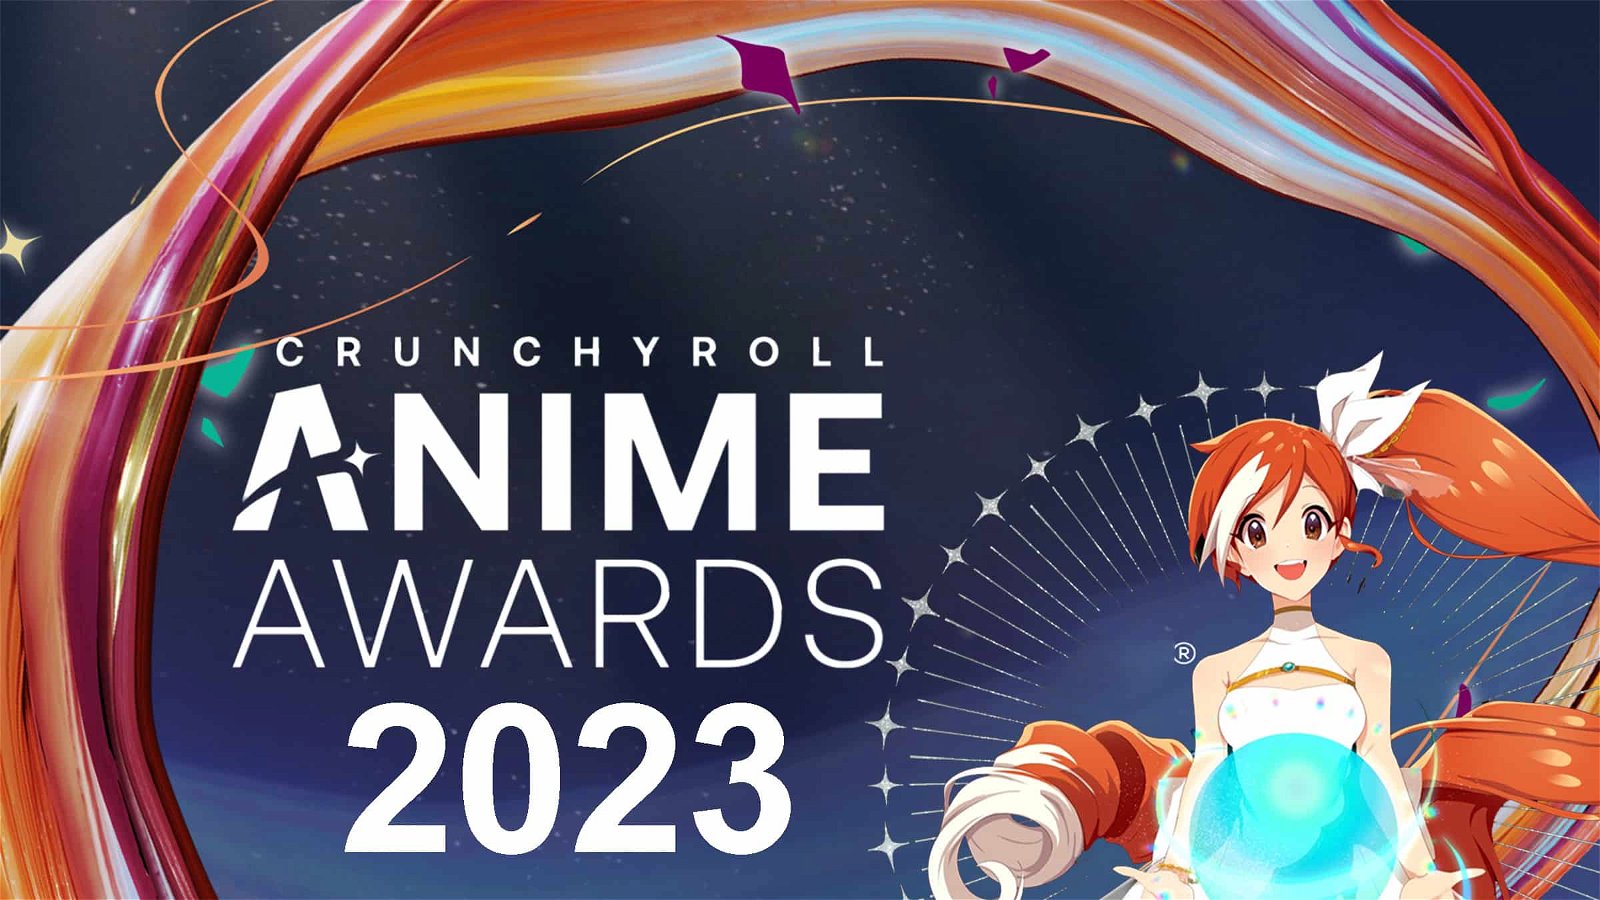 Crunchyroll Anime Awards Announces Presenters